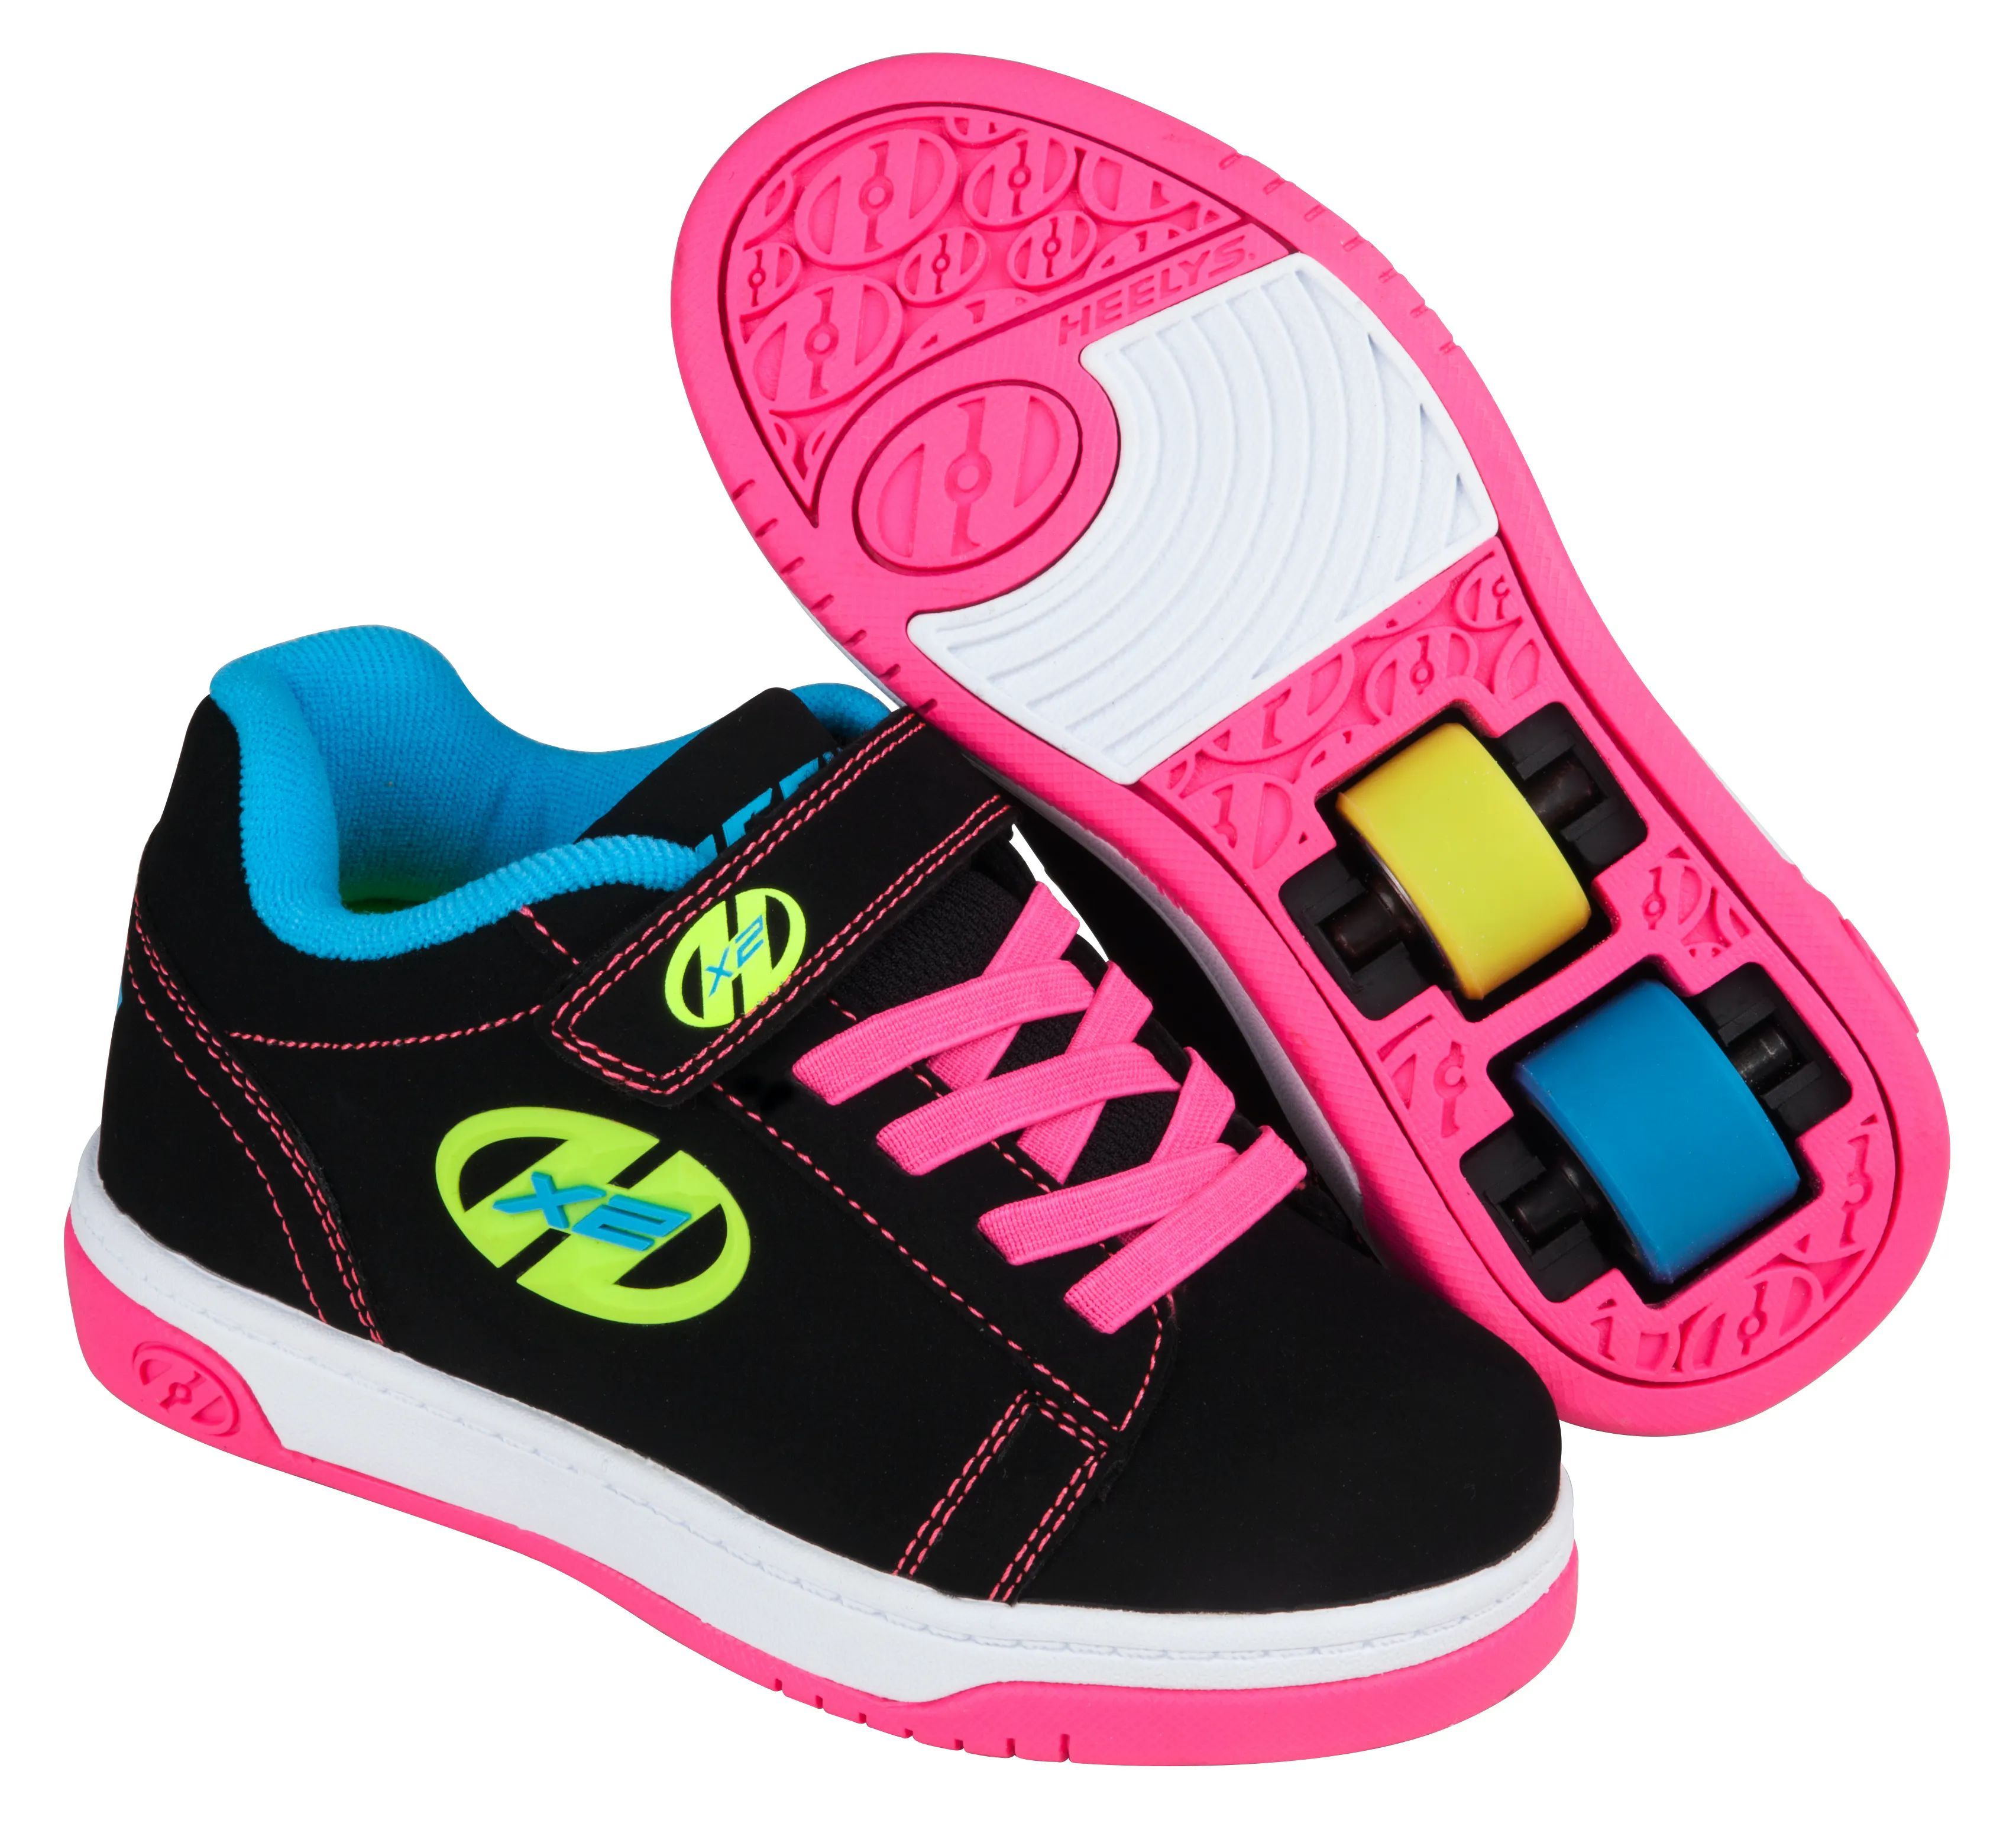 Heelys Dual Up X2 Kids Roller Skates Boys Wheels Trainers Shoes Unisex UK Sizes 